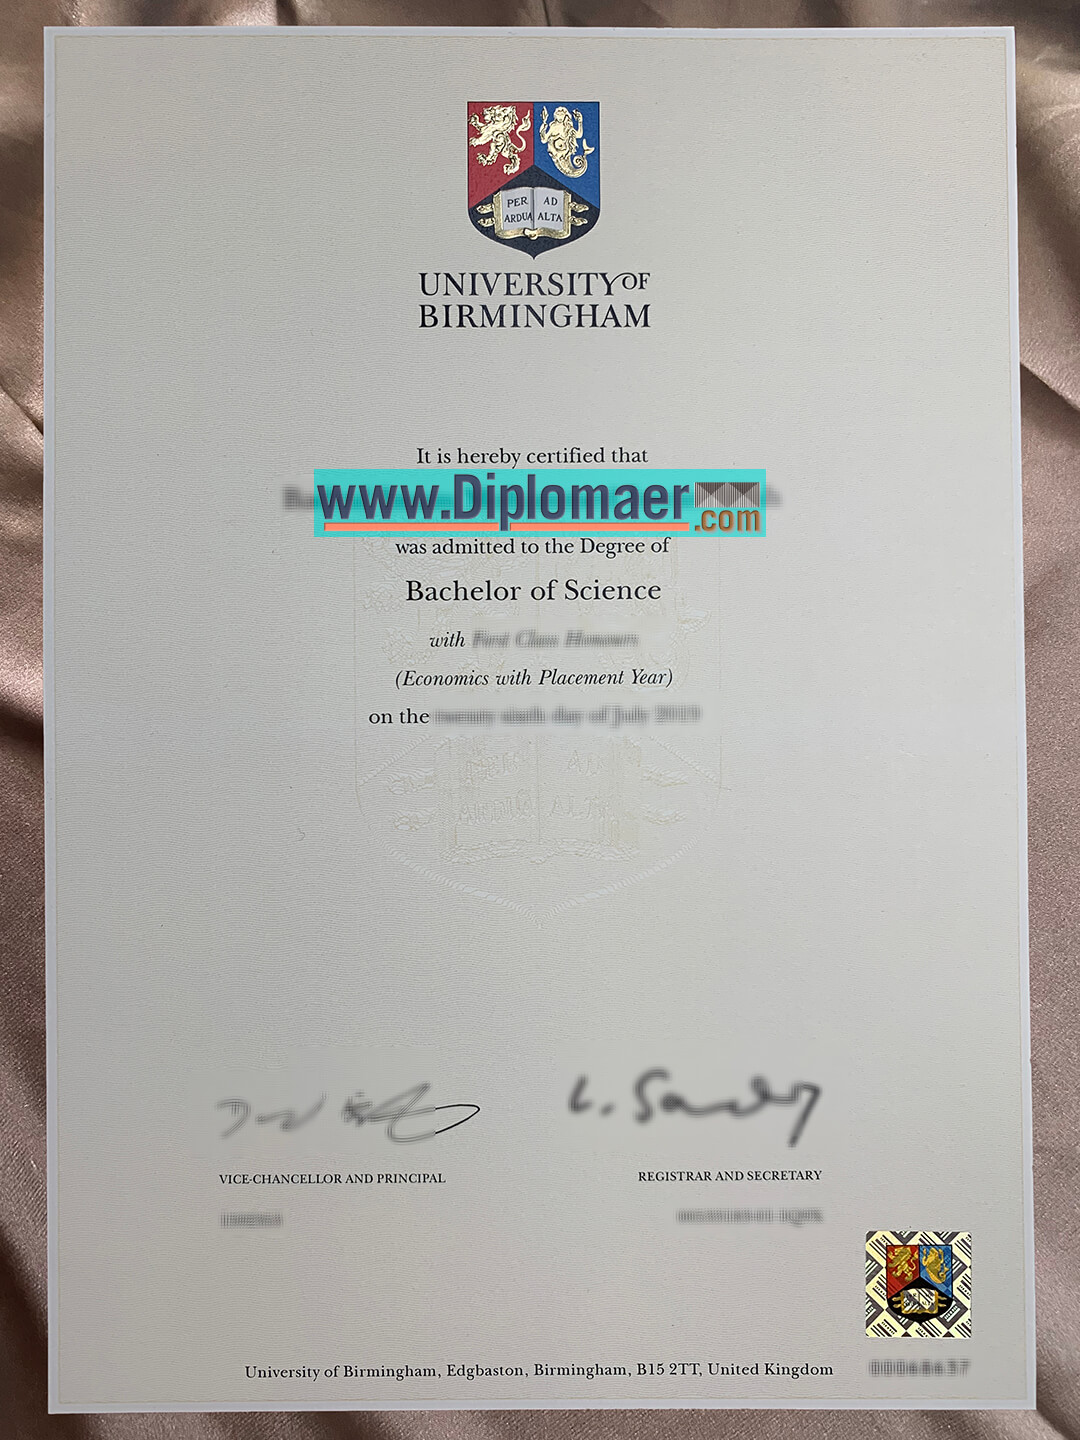 University of Birmingham Fake Diploma - Where to Buy the University of Birmingham Fake Certificate？